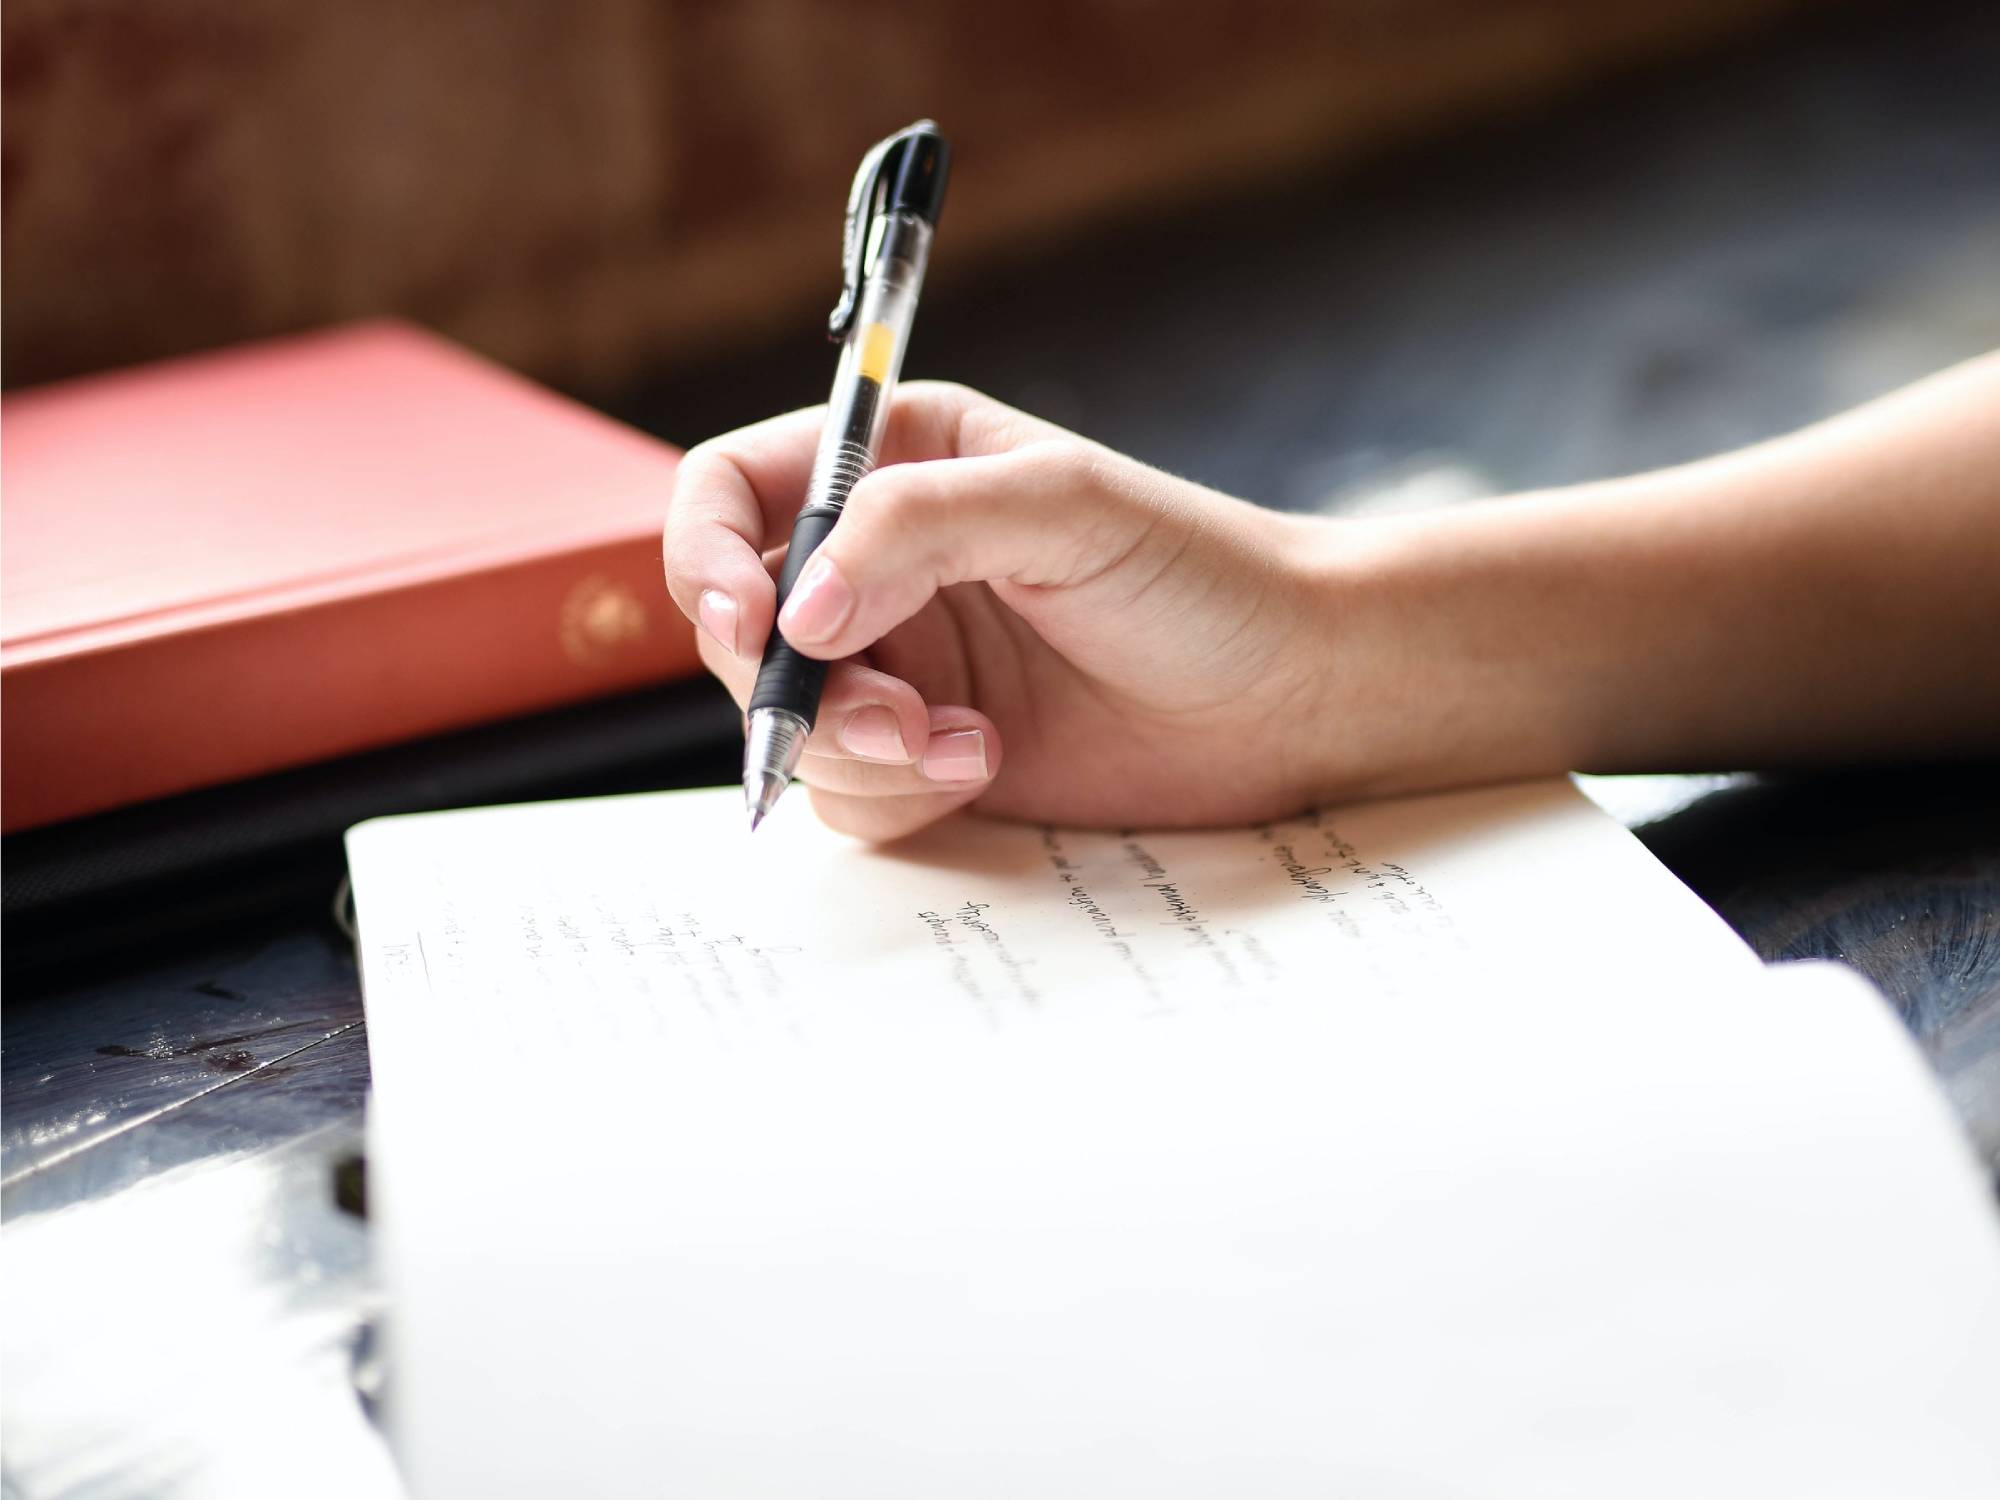 Top 4 ways to improve handwriting